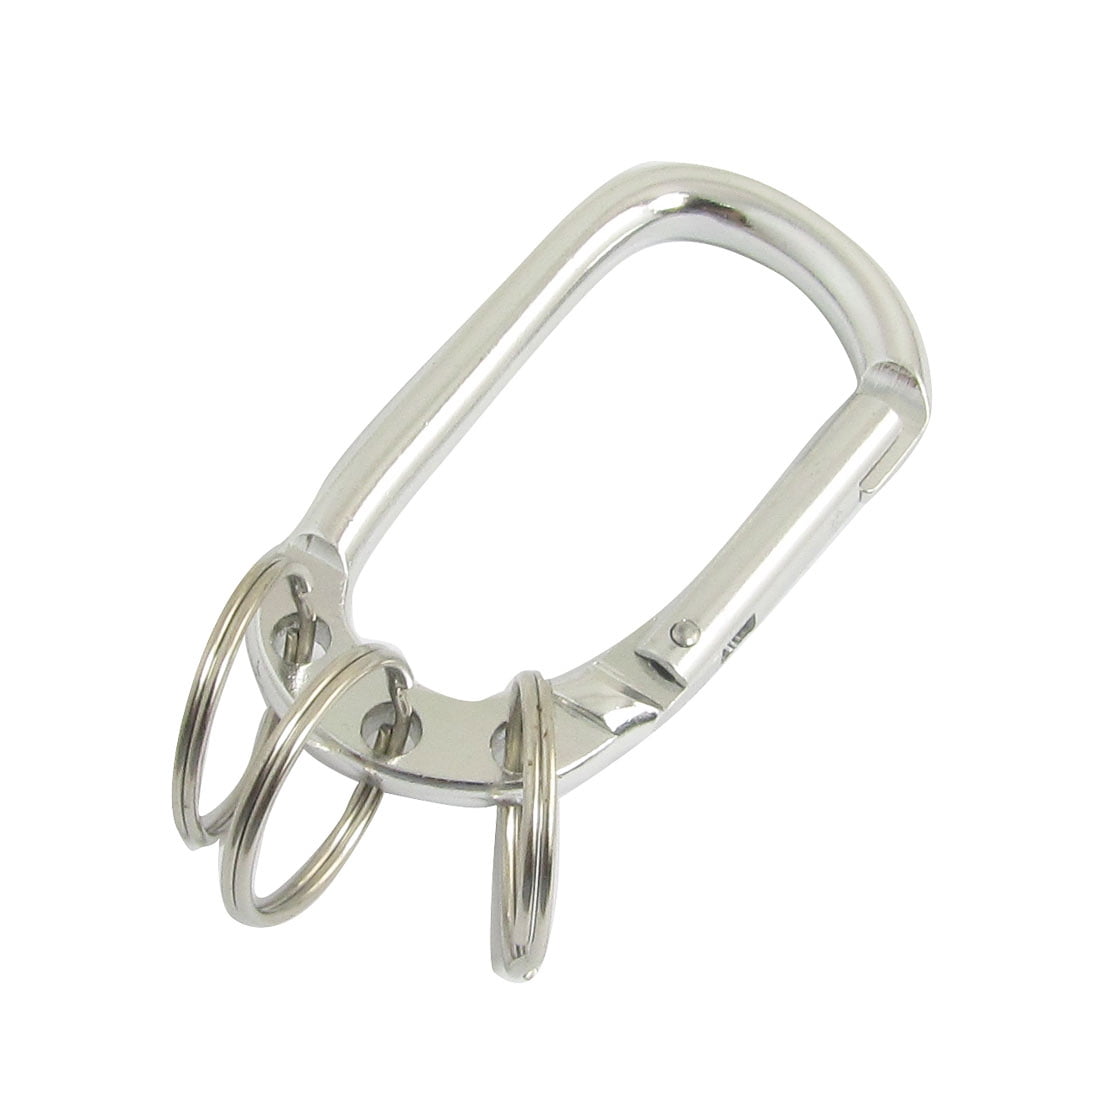 Locking Clips Black D Ring Spring Snap Key Chain Hook Gate Hooks 1Pcs 